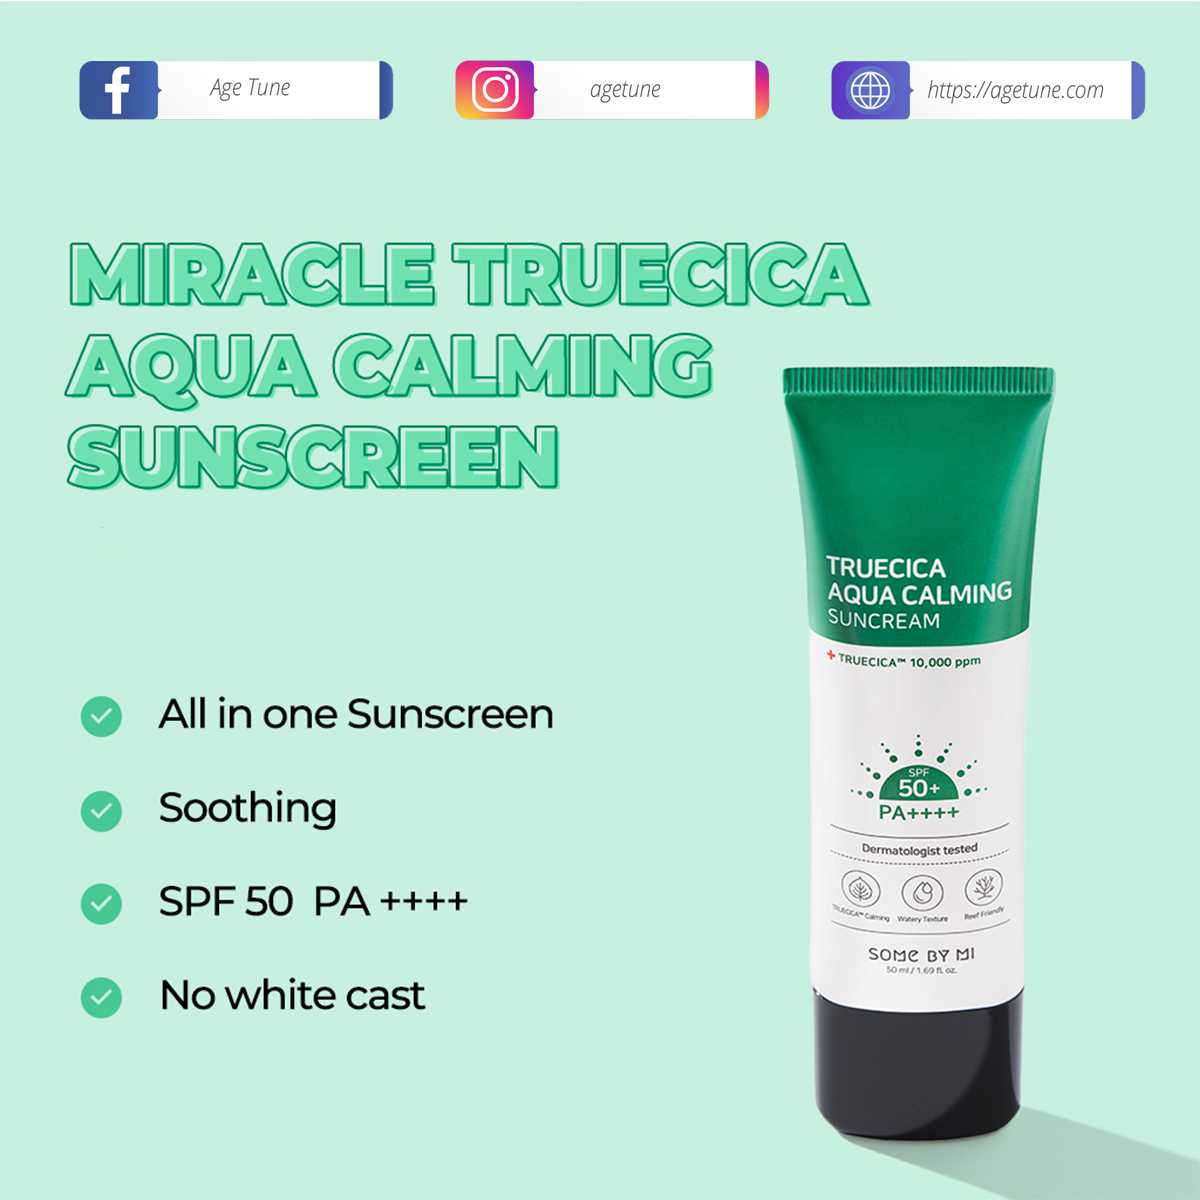 SOME BY MI Truecica Aqua Calming Sun Cream